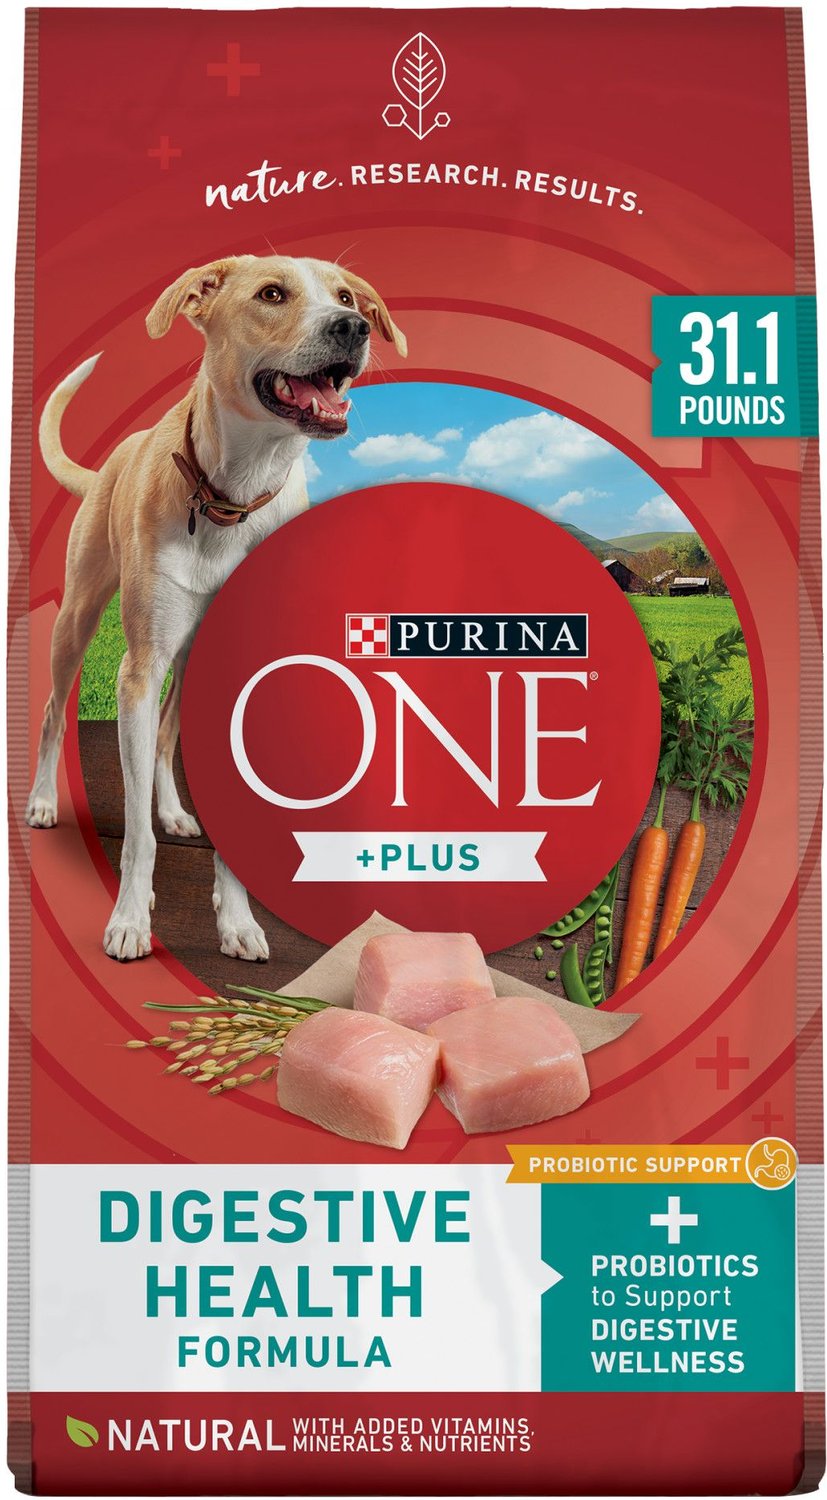 is purina one bad dog food